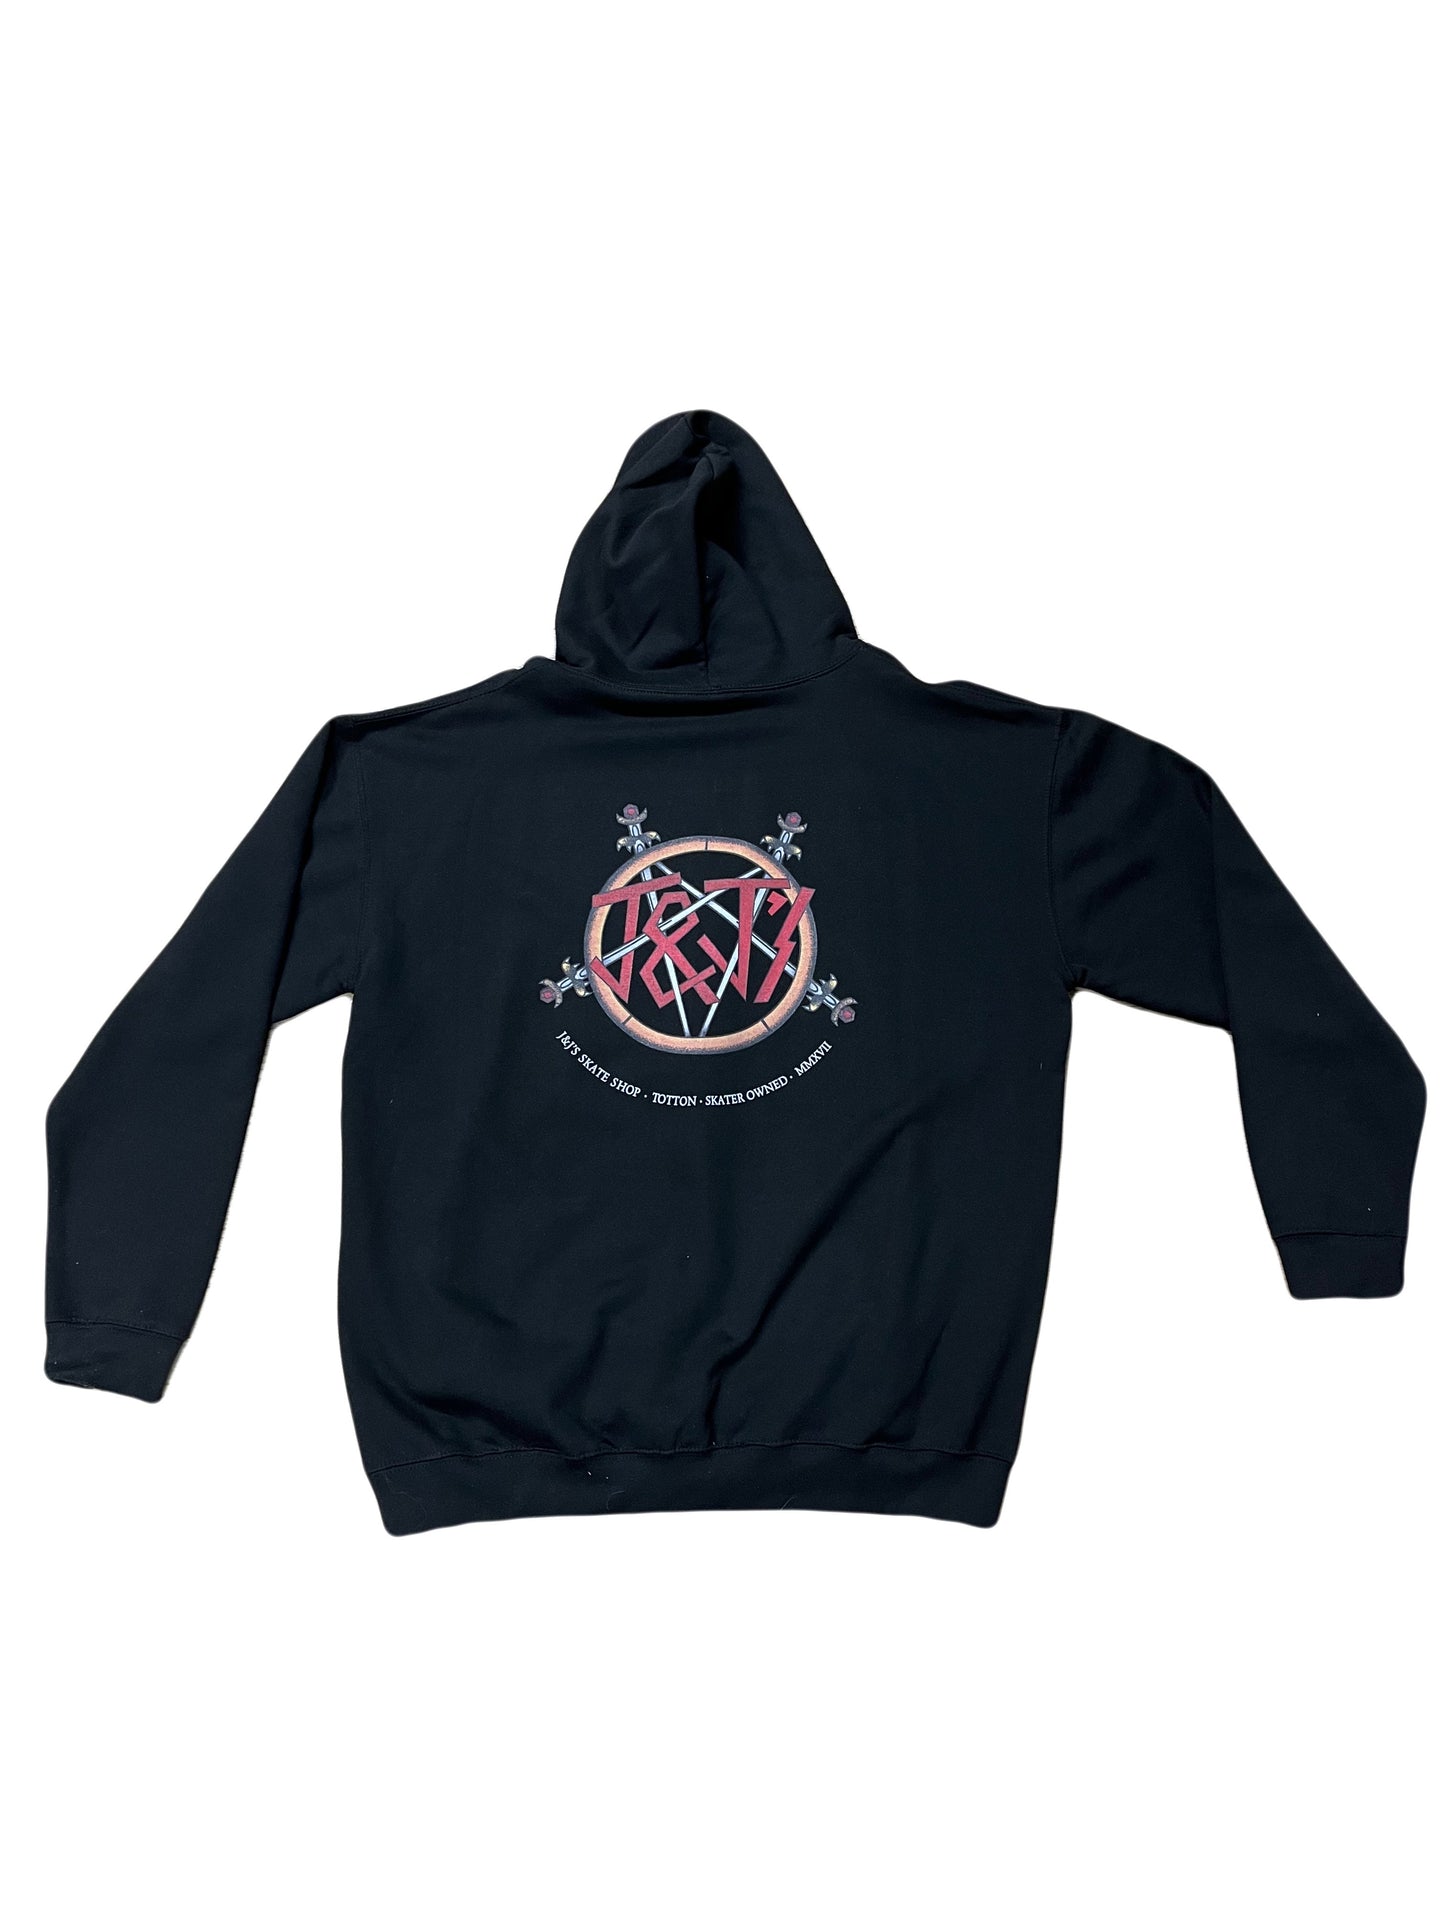 J and J's shop hoodie Slayer logo